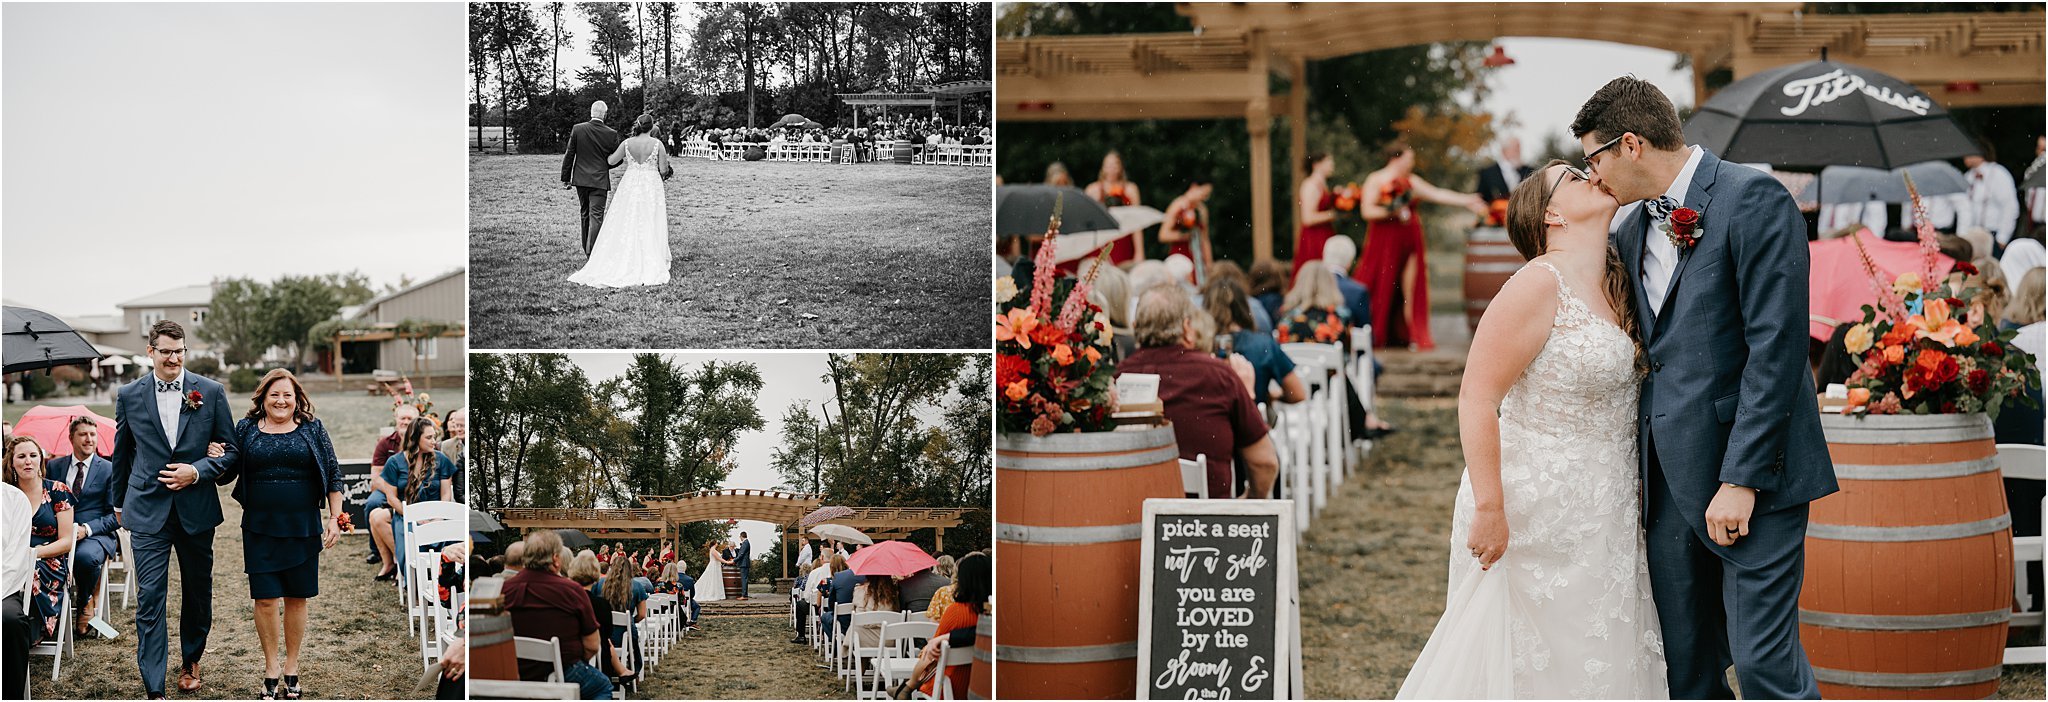 Winery wedding in Minnesota